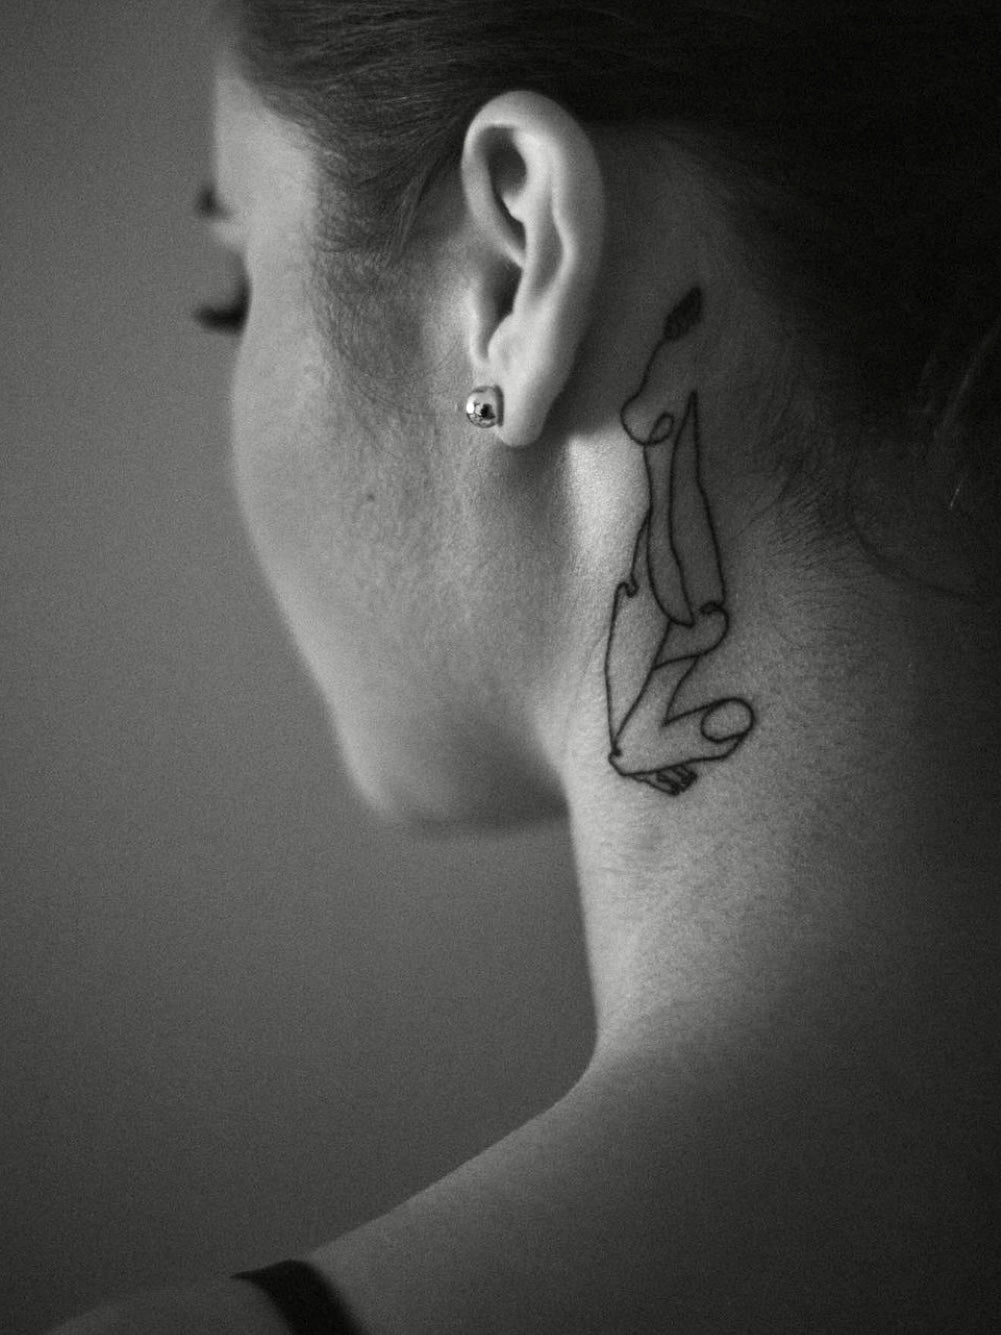 Best behind ear tattoos | Back ear tattoo designs | Behind ear tattoo ideas  | Lets style buddy - YouTube